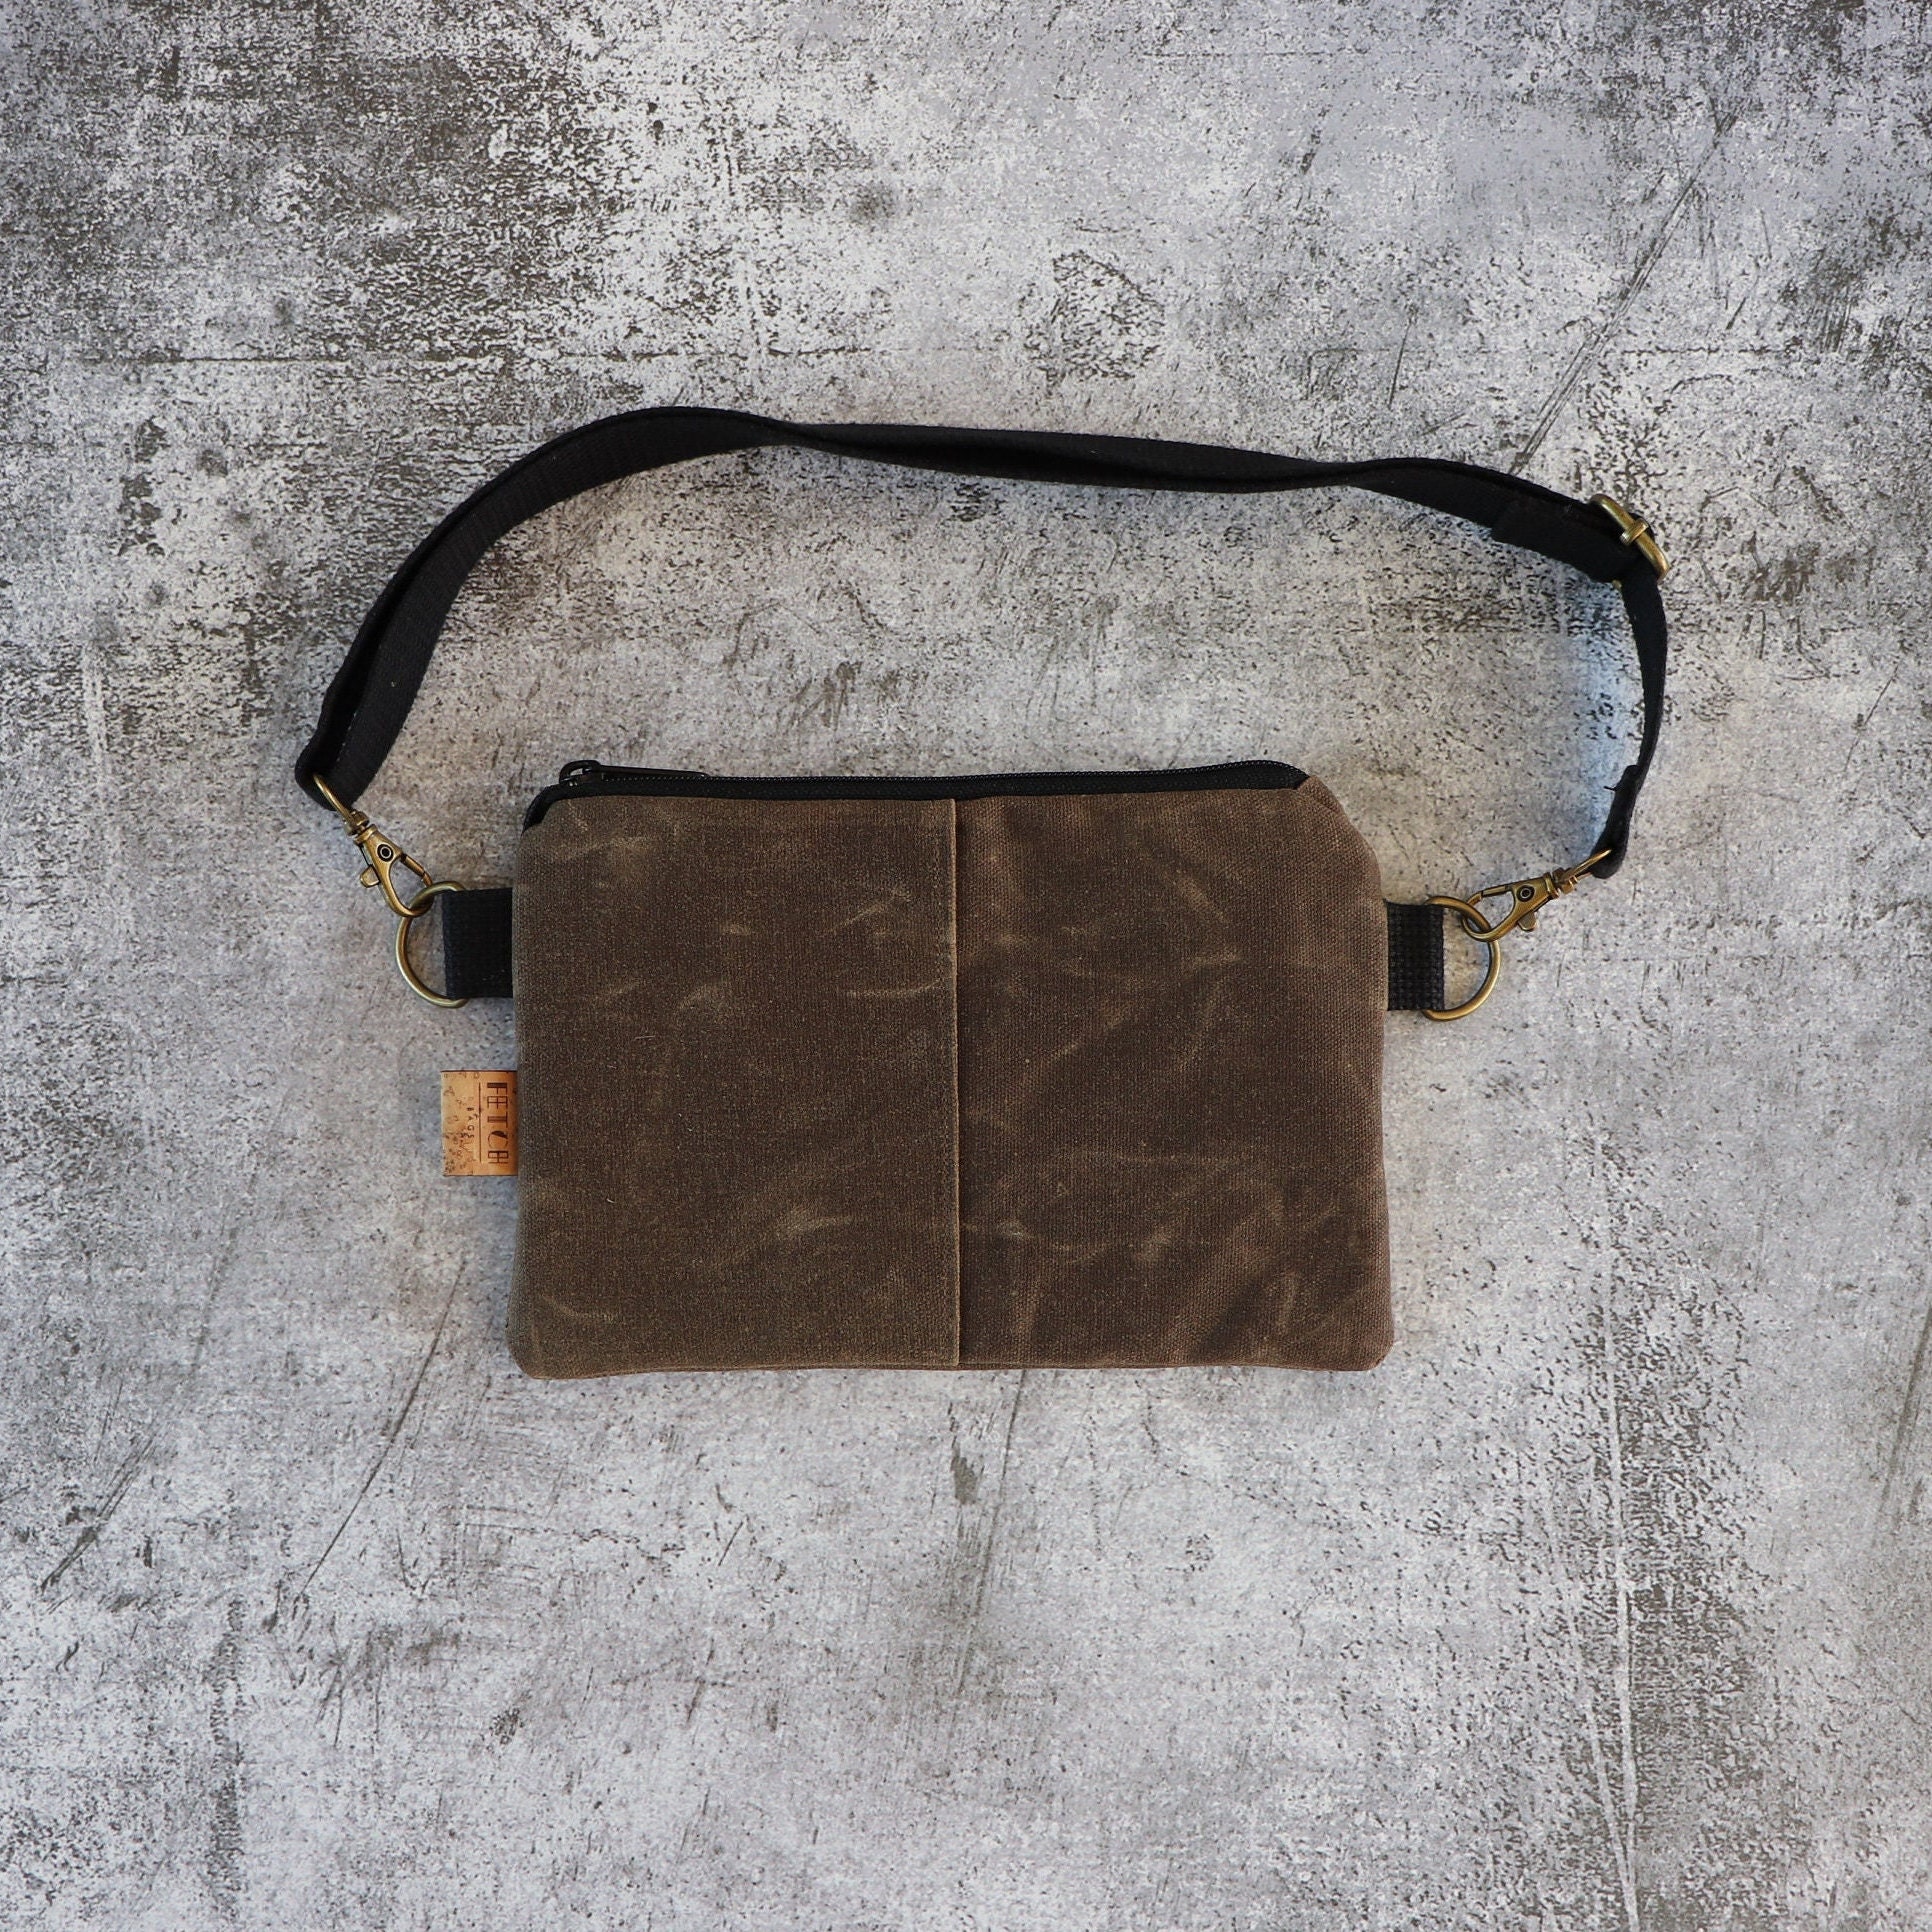 Embossed Textured Fanny Pack, Zipper Crossbody Chest Bag, Stylish